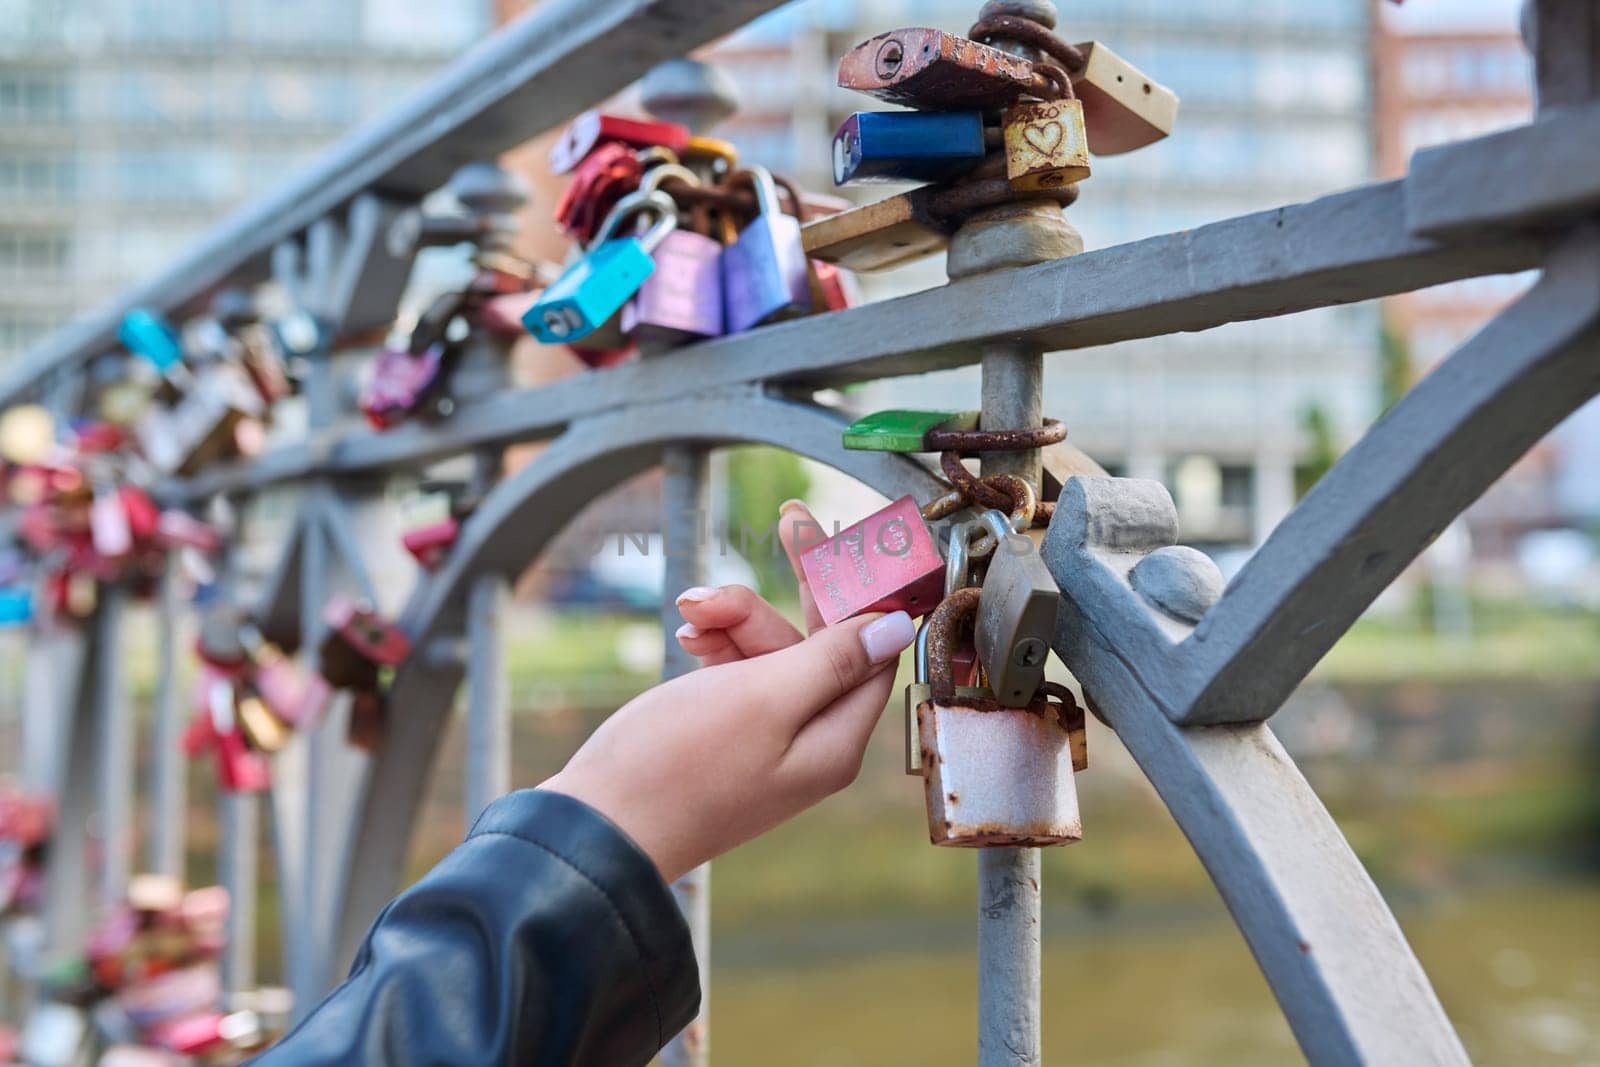 Hamburg, Germany, 1.08.2023, many closed heart love locks on the bridge, woman's hand holding her love padlock, close up. Romantic symbols signs